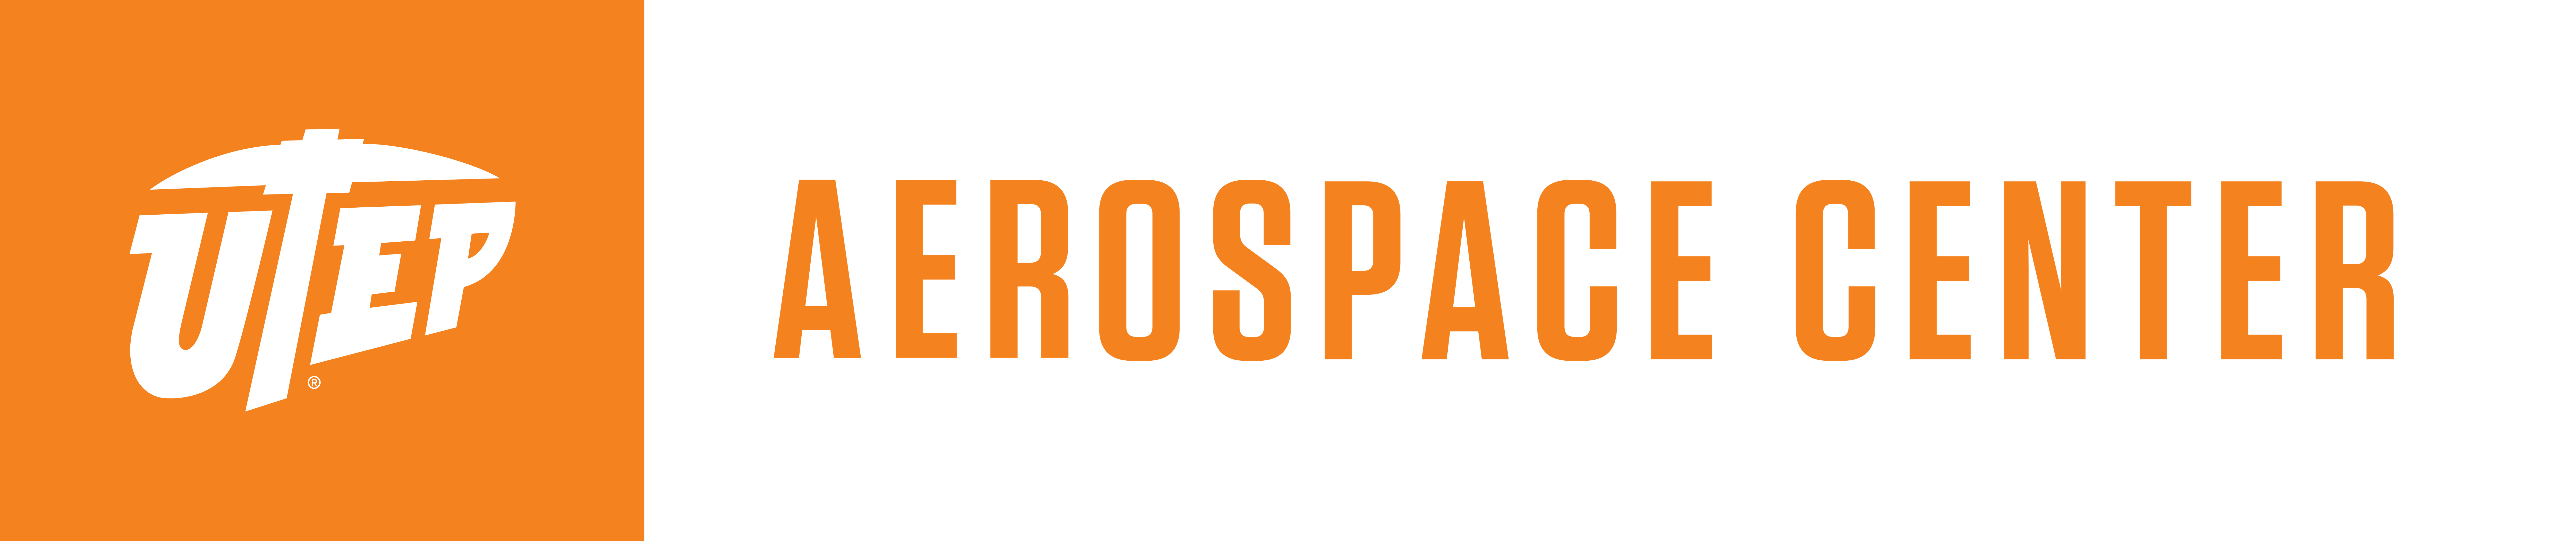 aerospace_logo.png